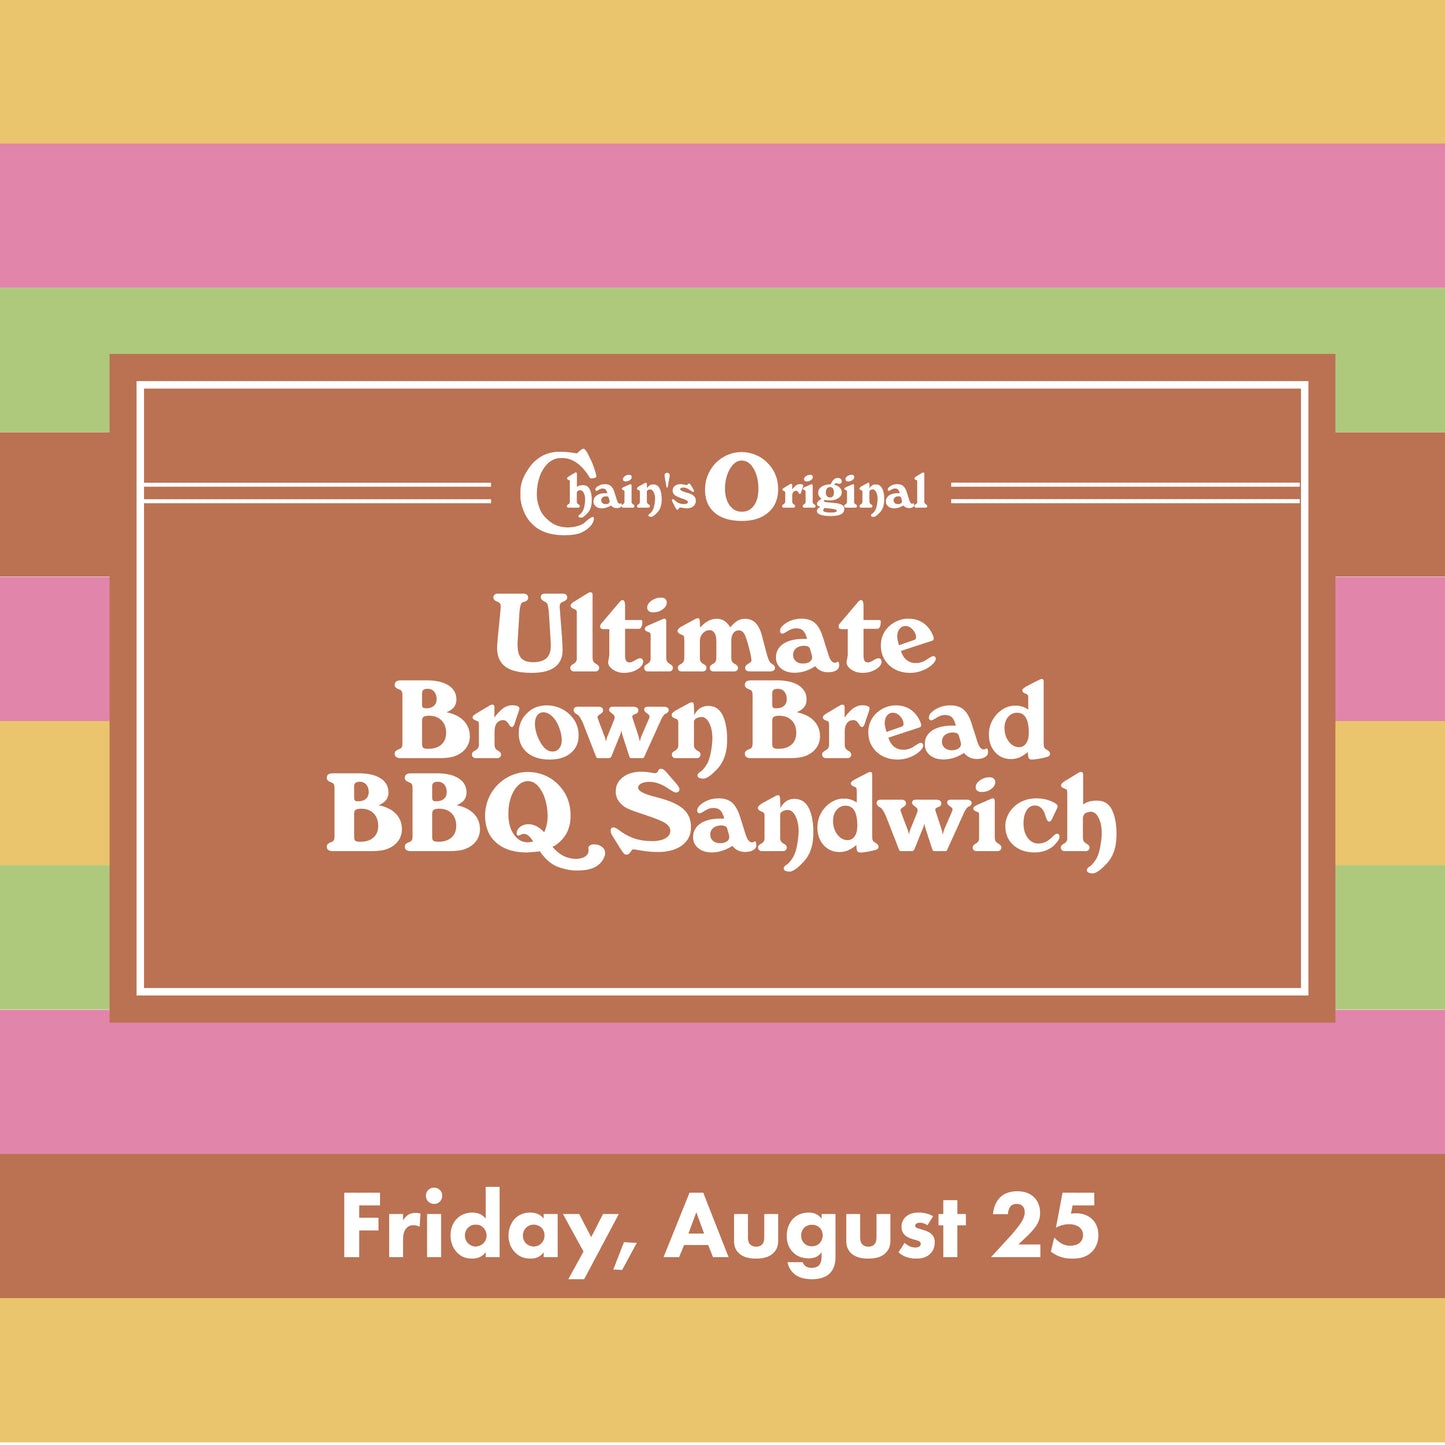 Friday 8/25 - Chain's Original Ultimate Brown Bread BBQ Sandwich